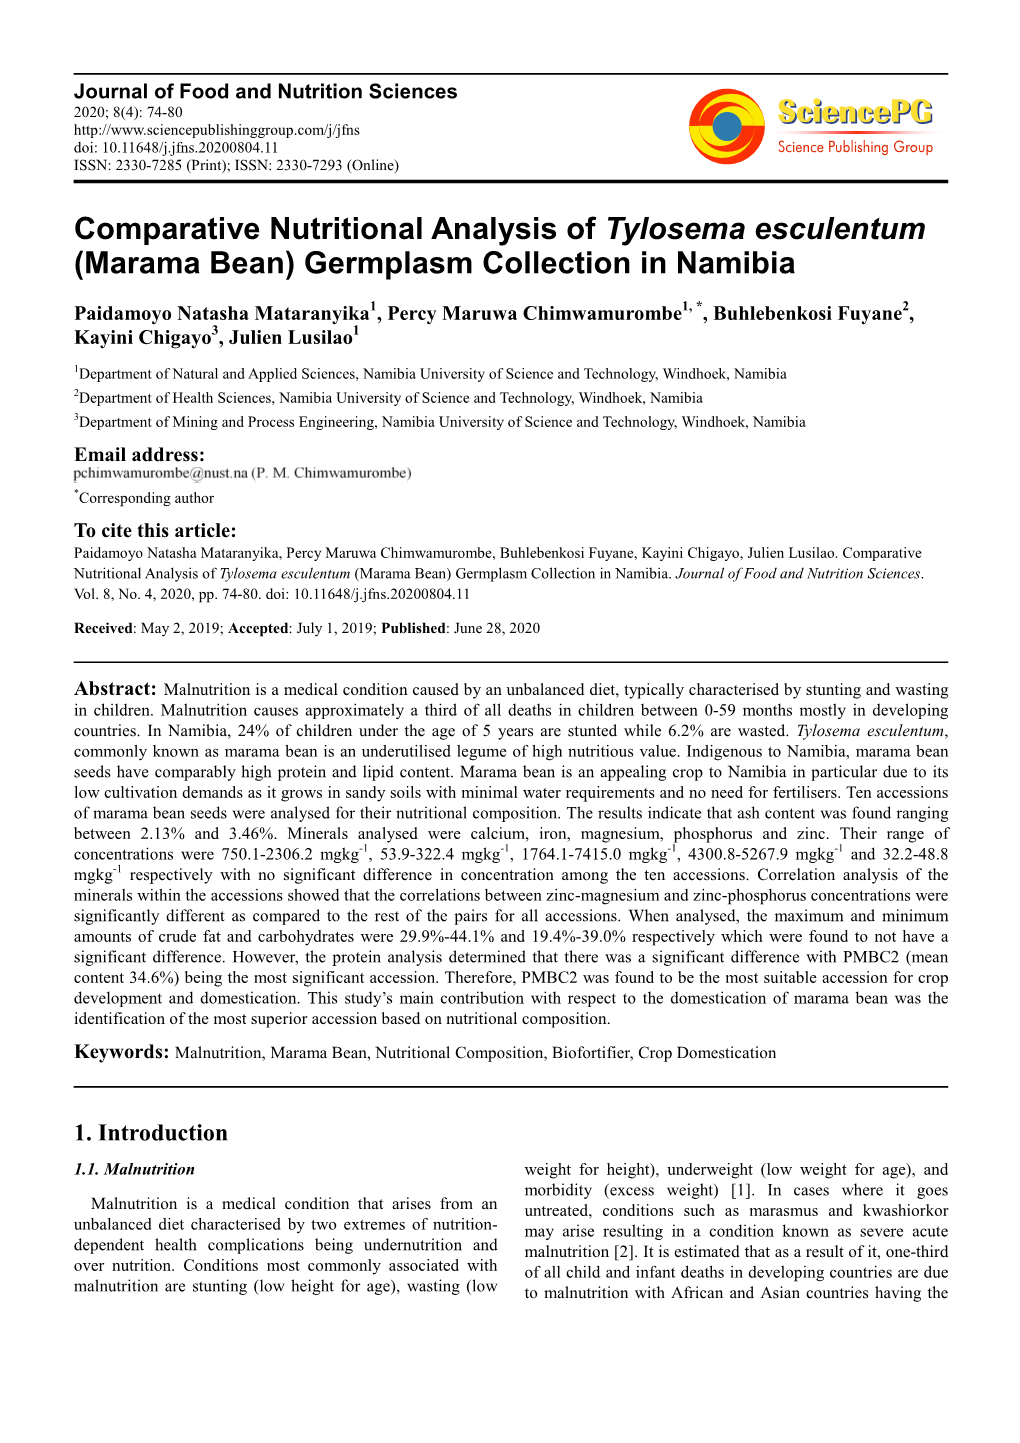 Comparative Nutritional Analysis of Tylosema Esculentum (Marama Bean) Germplasm Collection in Namibia